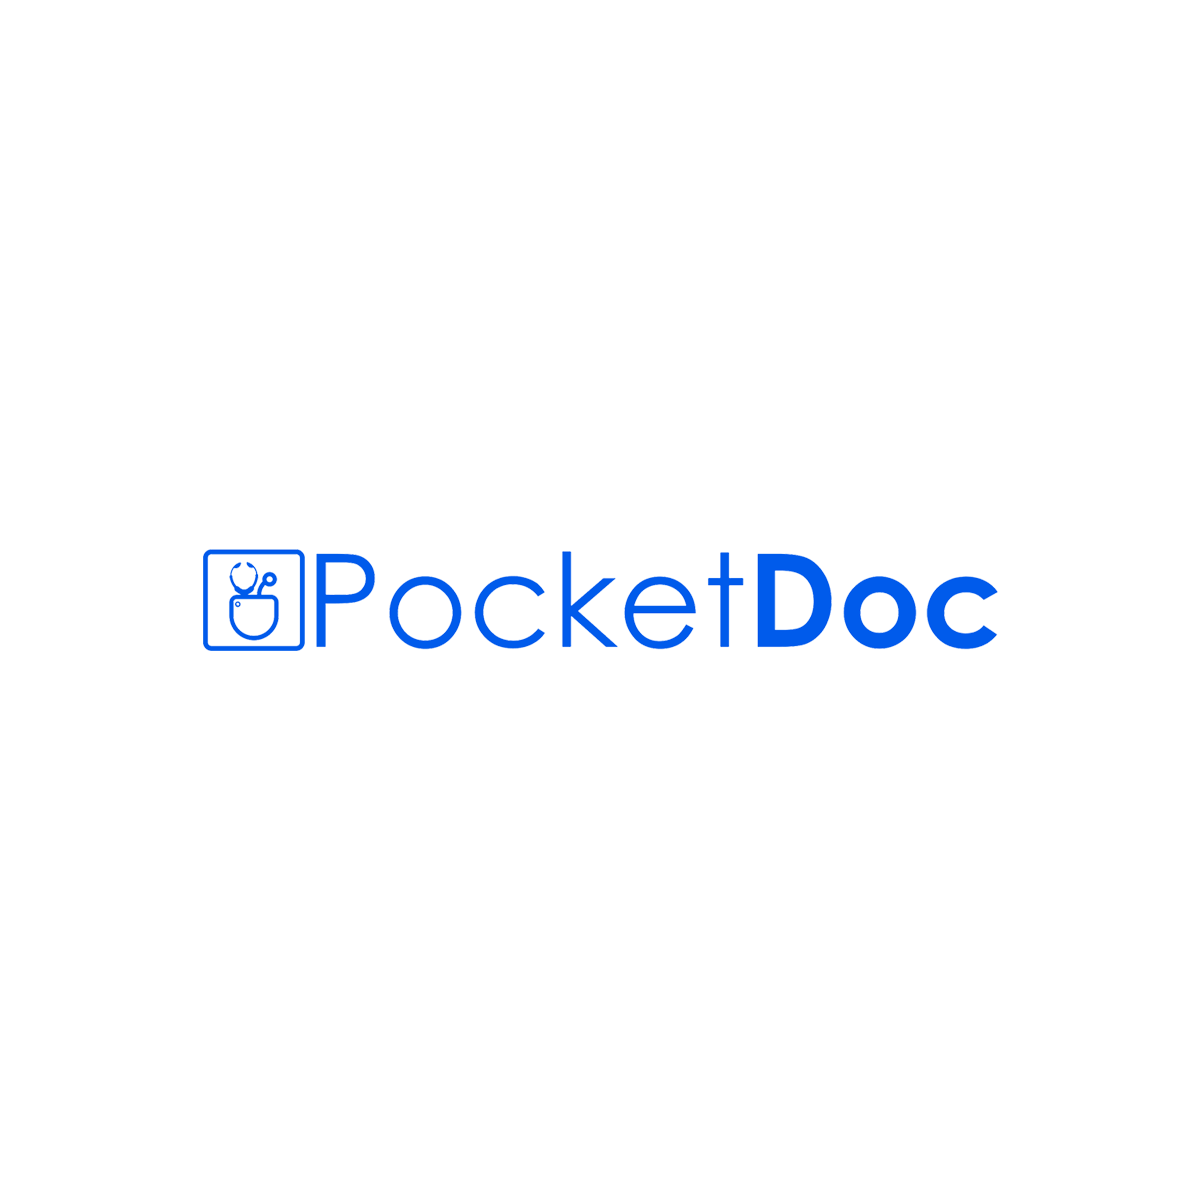 PocketDoc